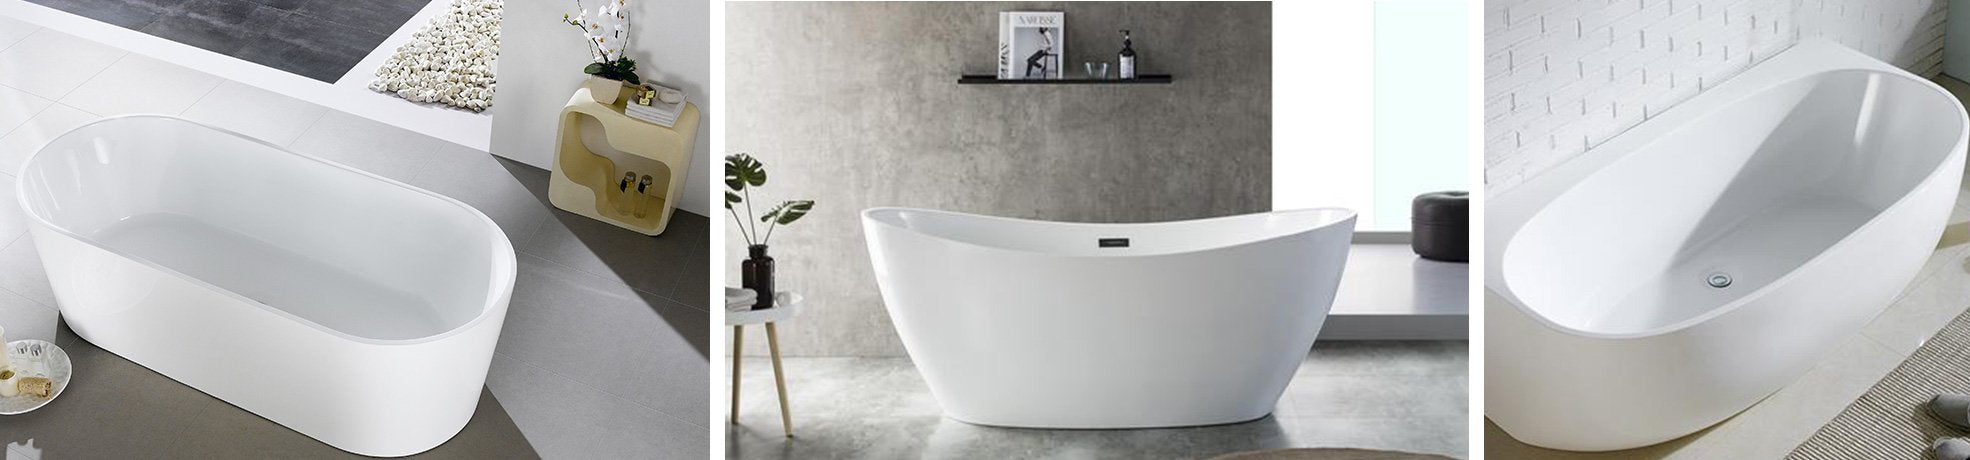 Baths Freestanding Modern Traditional Acrylic Stone